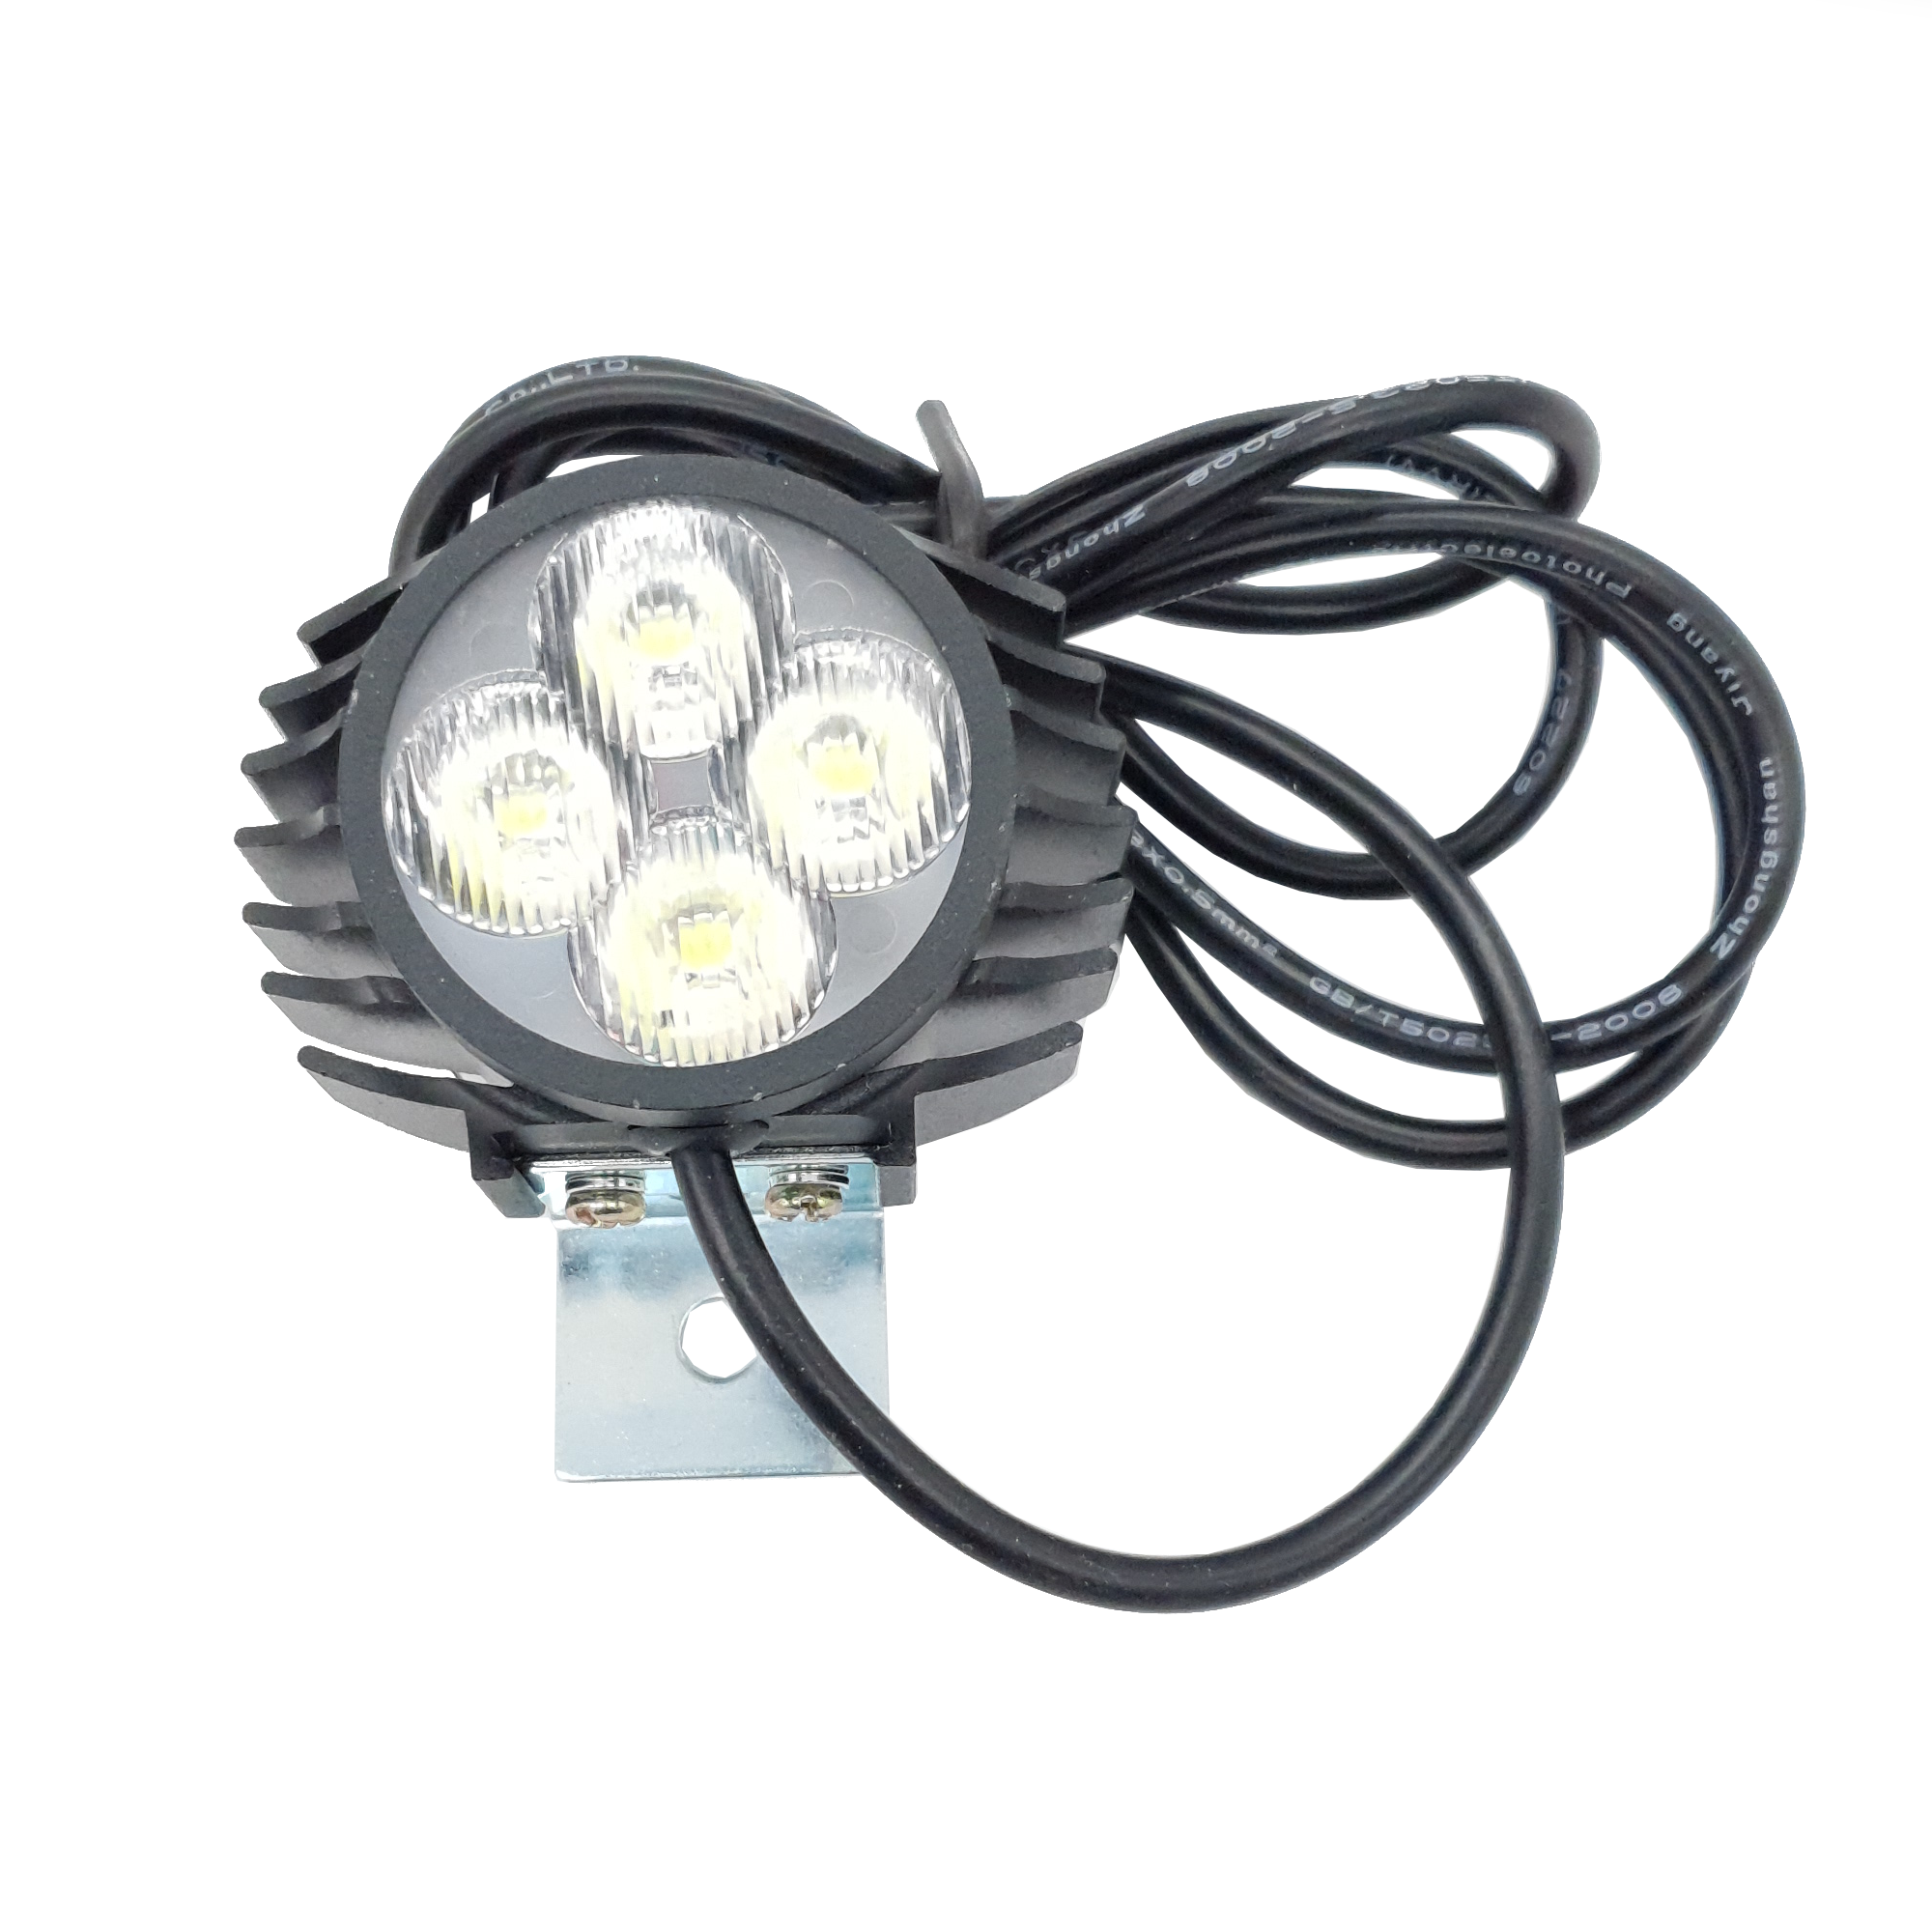 E Scooter kaufen - LED-Lampe mit eingebauter elektr. Klingel